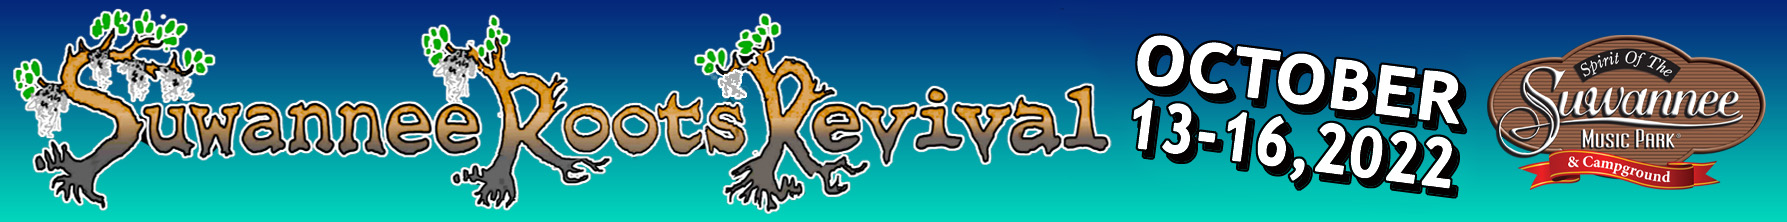 Suwannee Roots Revival™| Oct 13-16, 2022